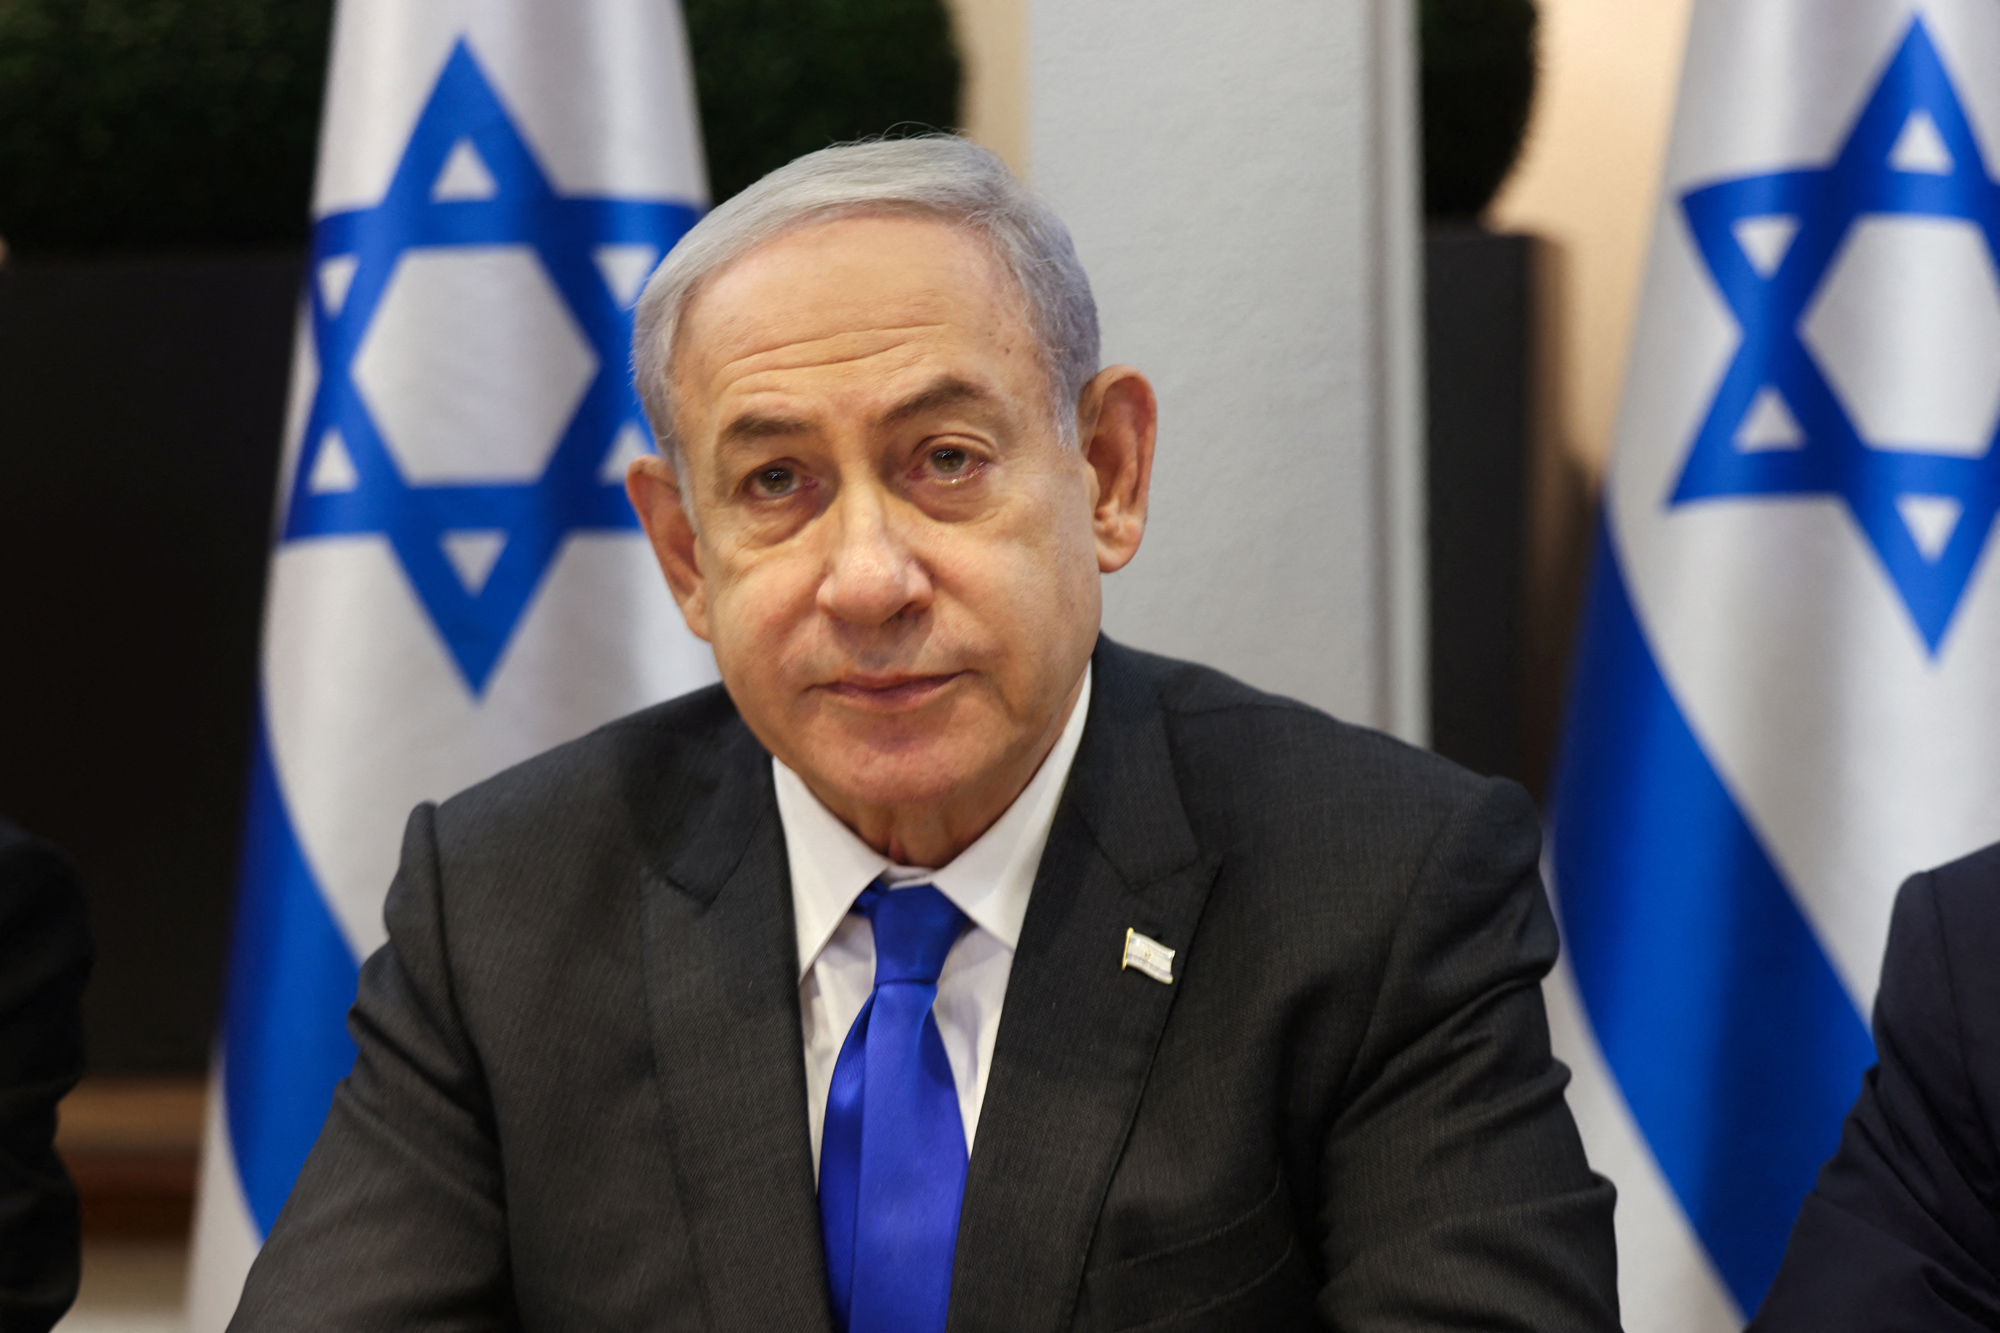 Israeli Prime Minister Benjamin Netanyahu chairs a Cabinet meeting at the Kirya, which houses the Israeli Ministry of Defense, in Tel Aviv, Israel, on December 17.